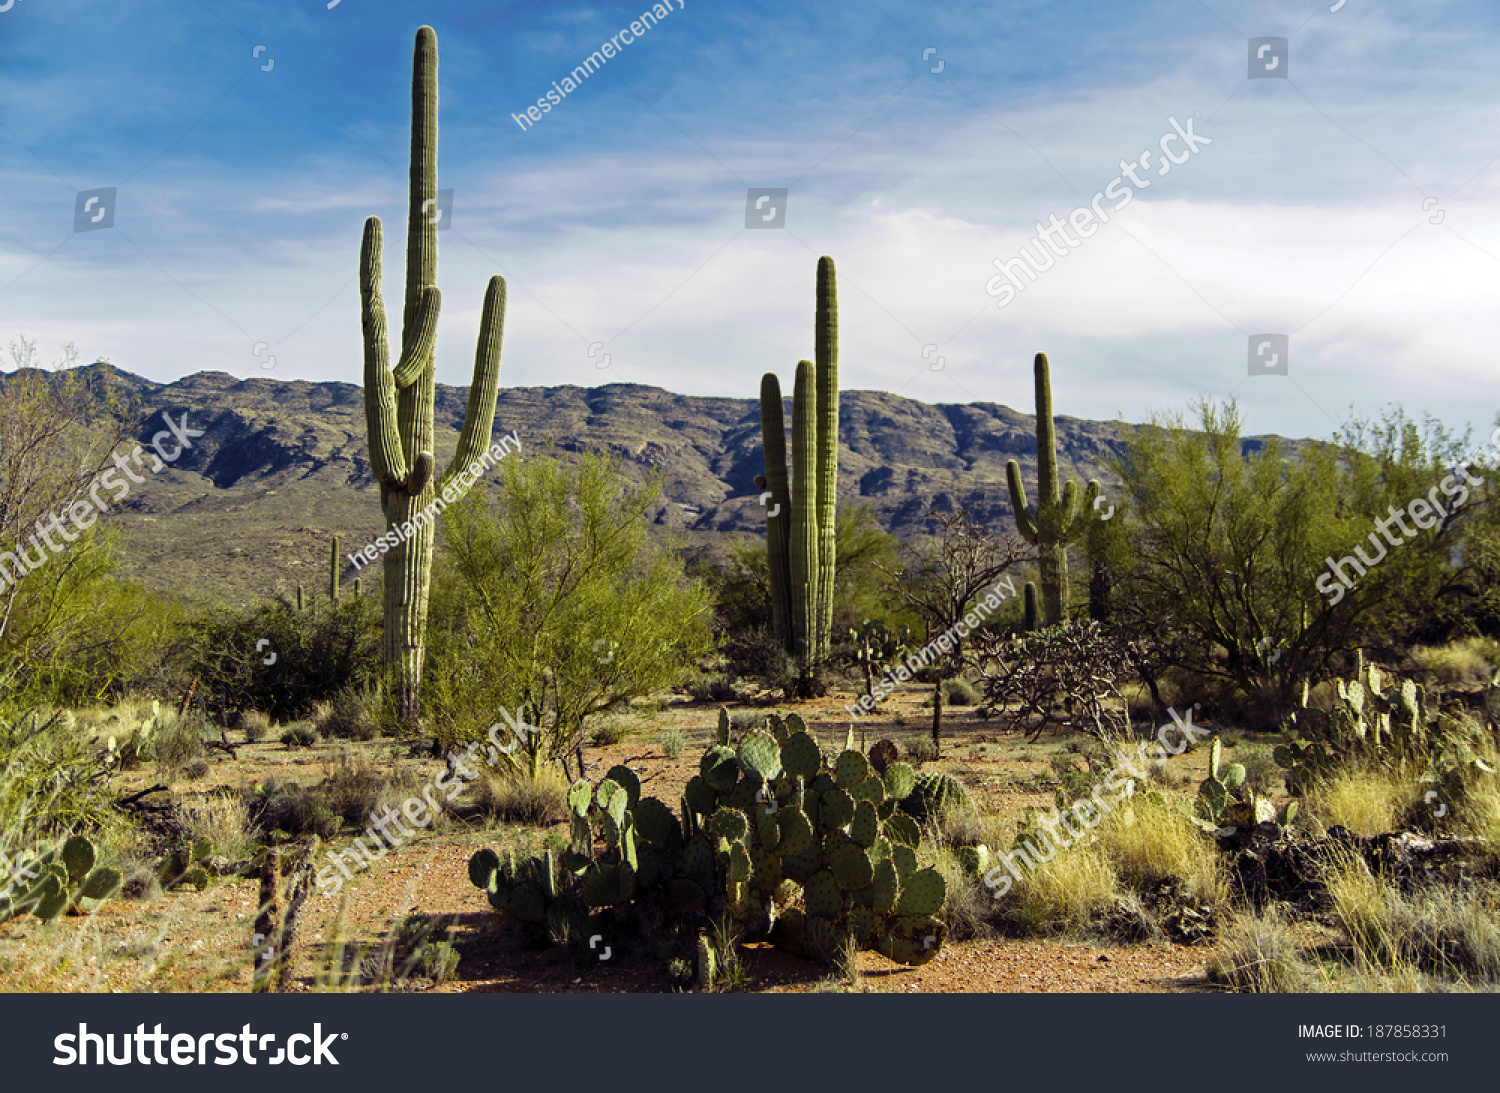 Giant Saguaro Cactus At Saguaro National Park Royalty Free Stock Photo 187858331 Avopix Com